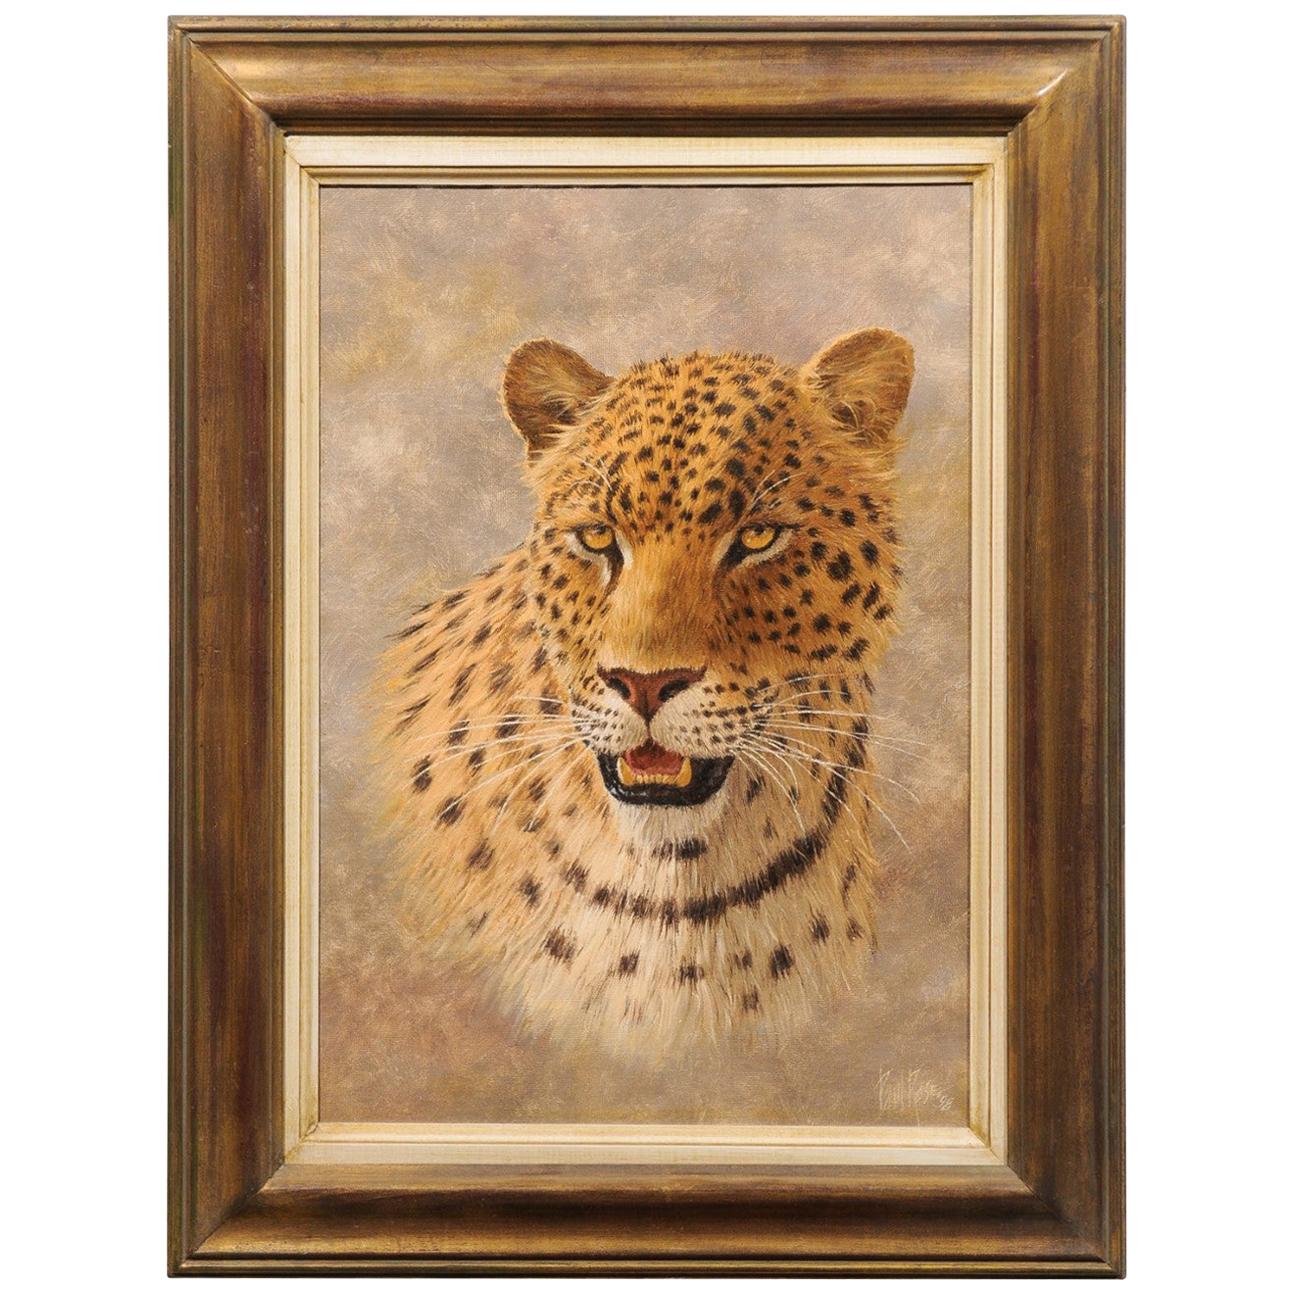 Original Vertical Framed Paul Rose Wildlife Painting Depicting a Leopard Head